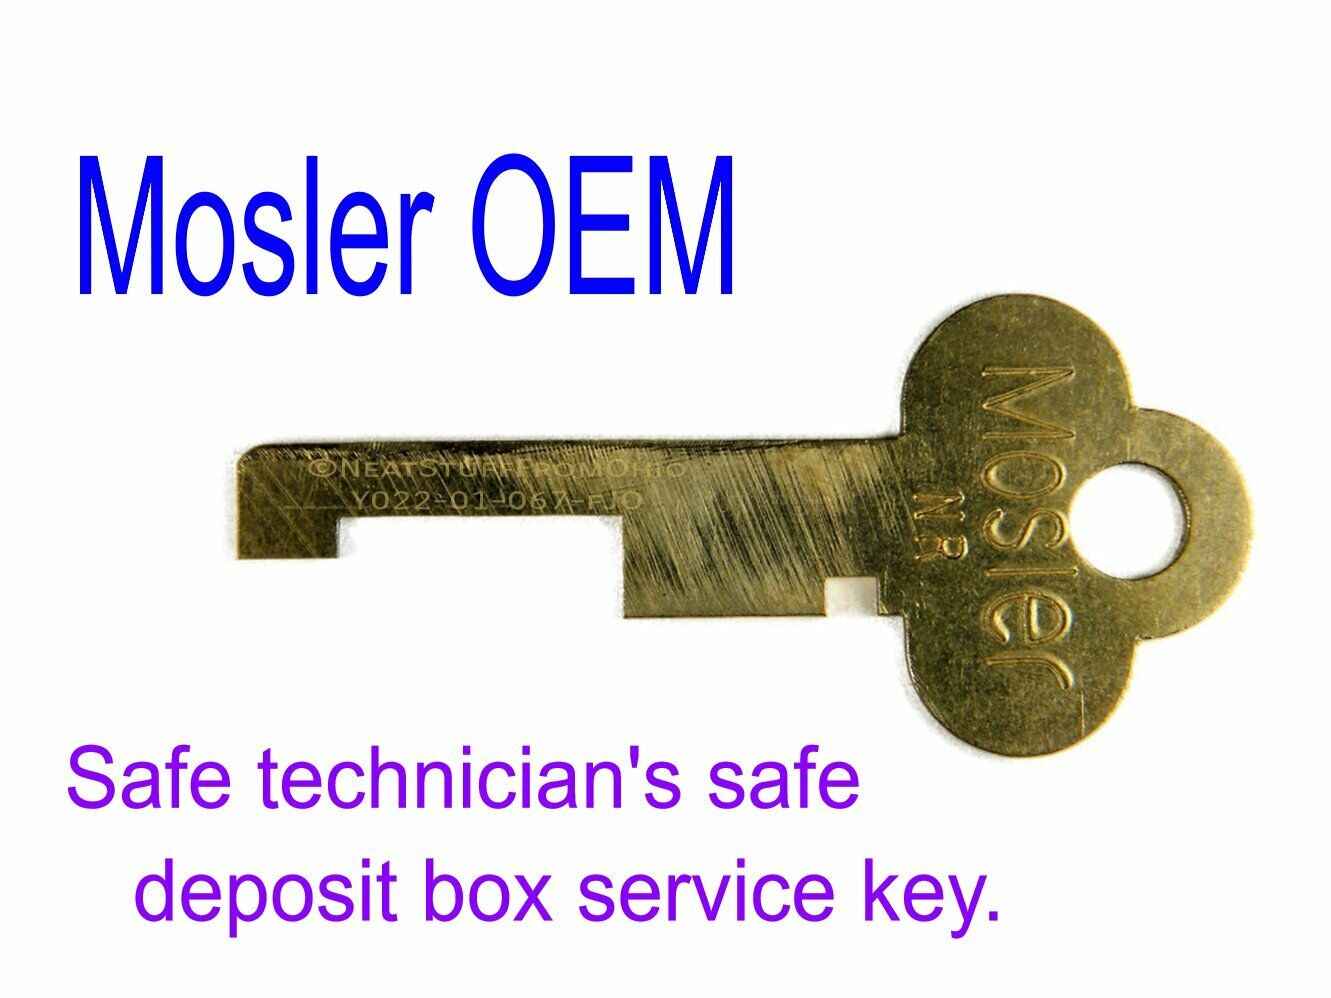 SAFE DEPOSIT BOX WAFERS / PLATES CHANGE KEY, MOSLER, FACTORY-CUT TECHNICIAN KEY